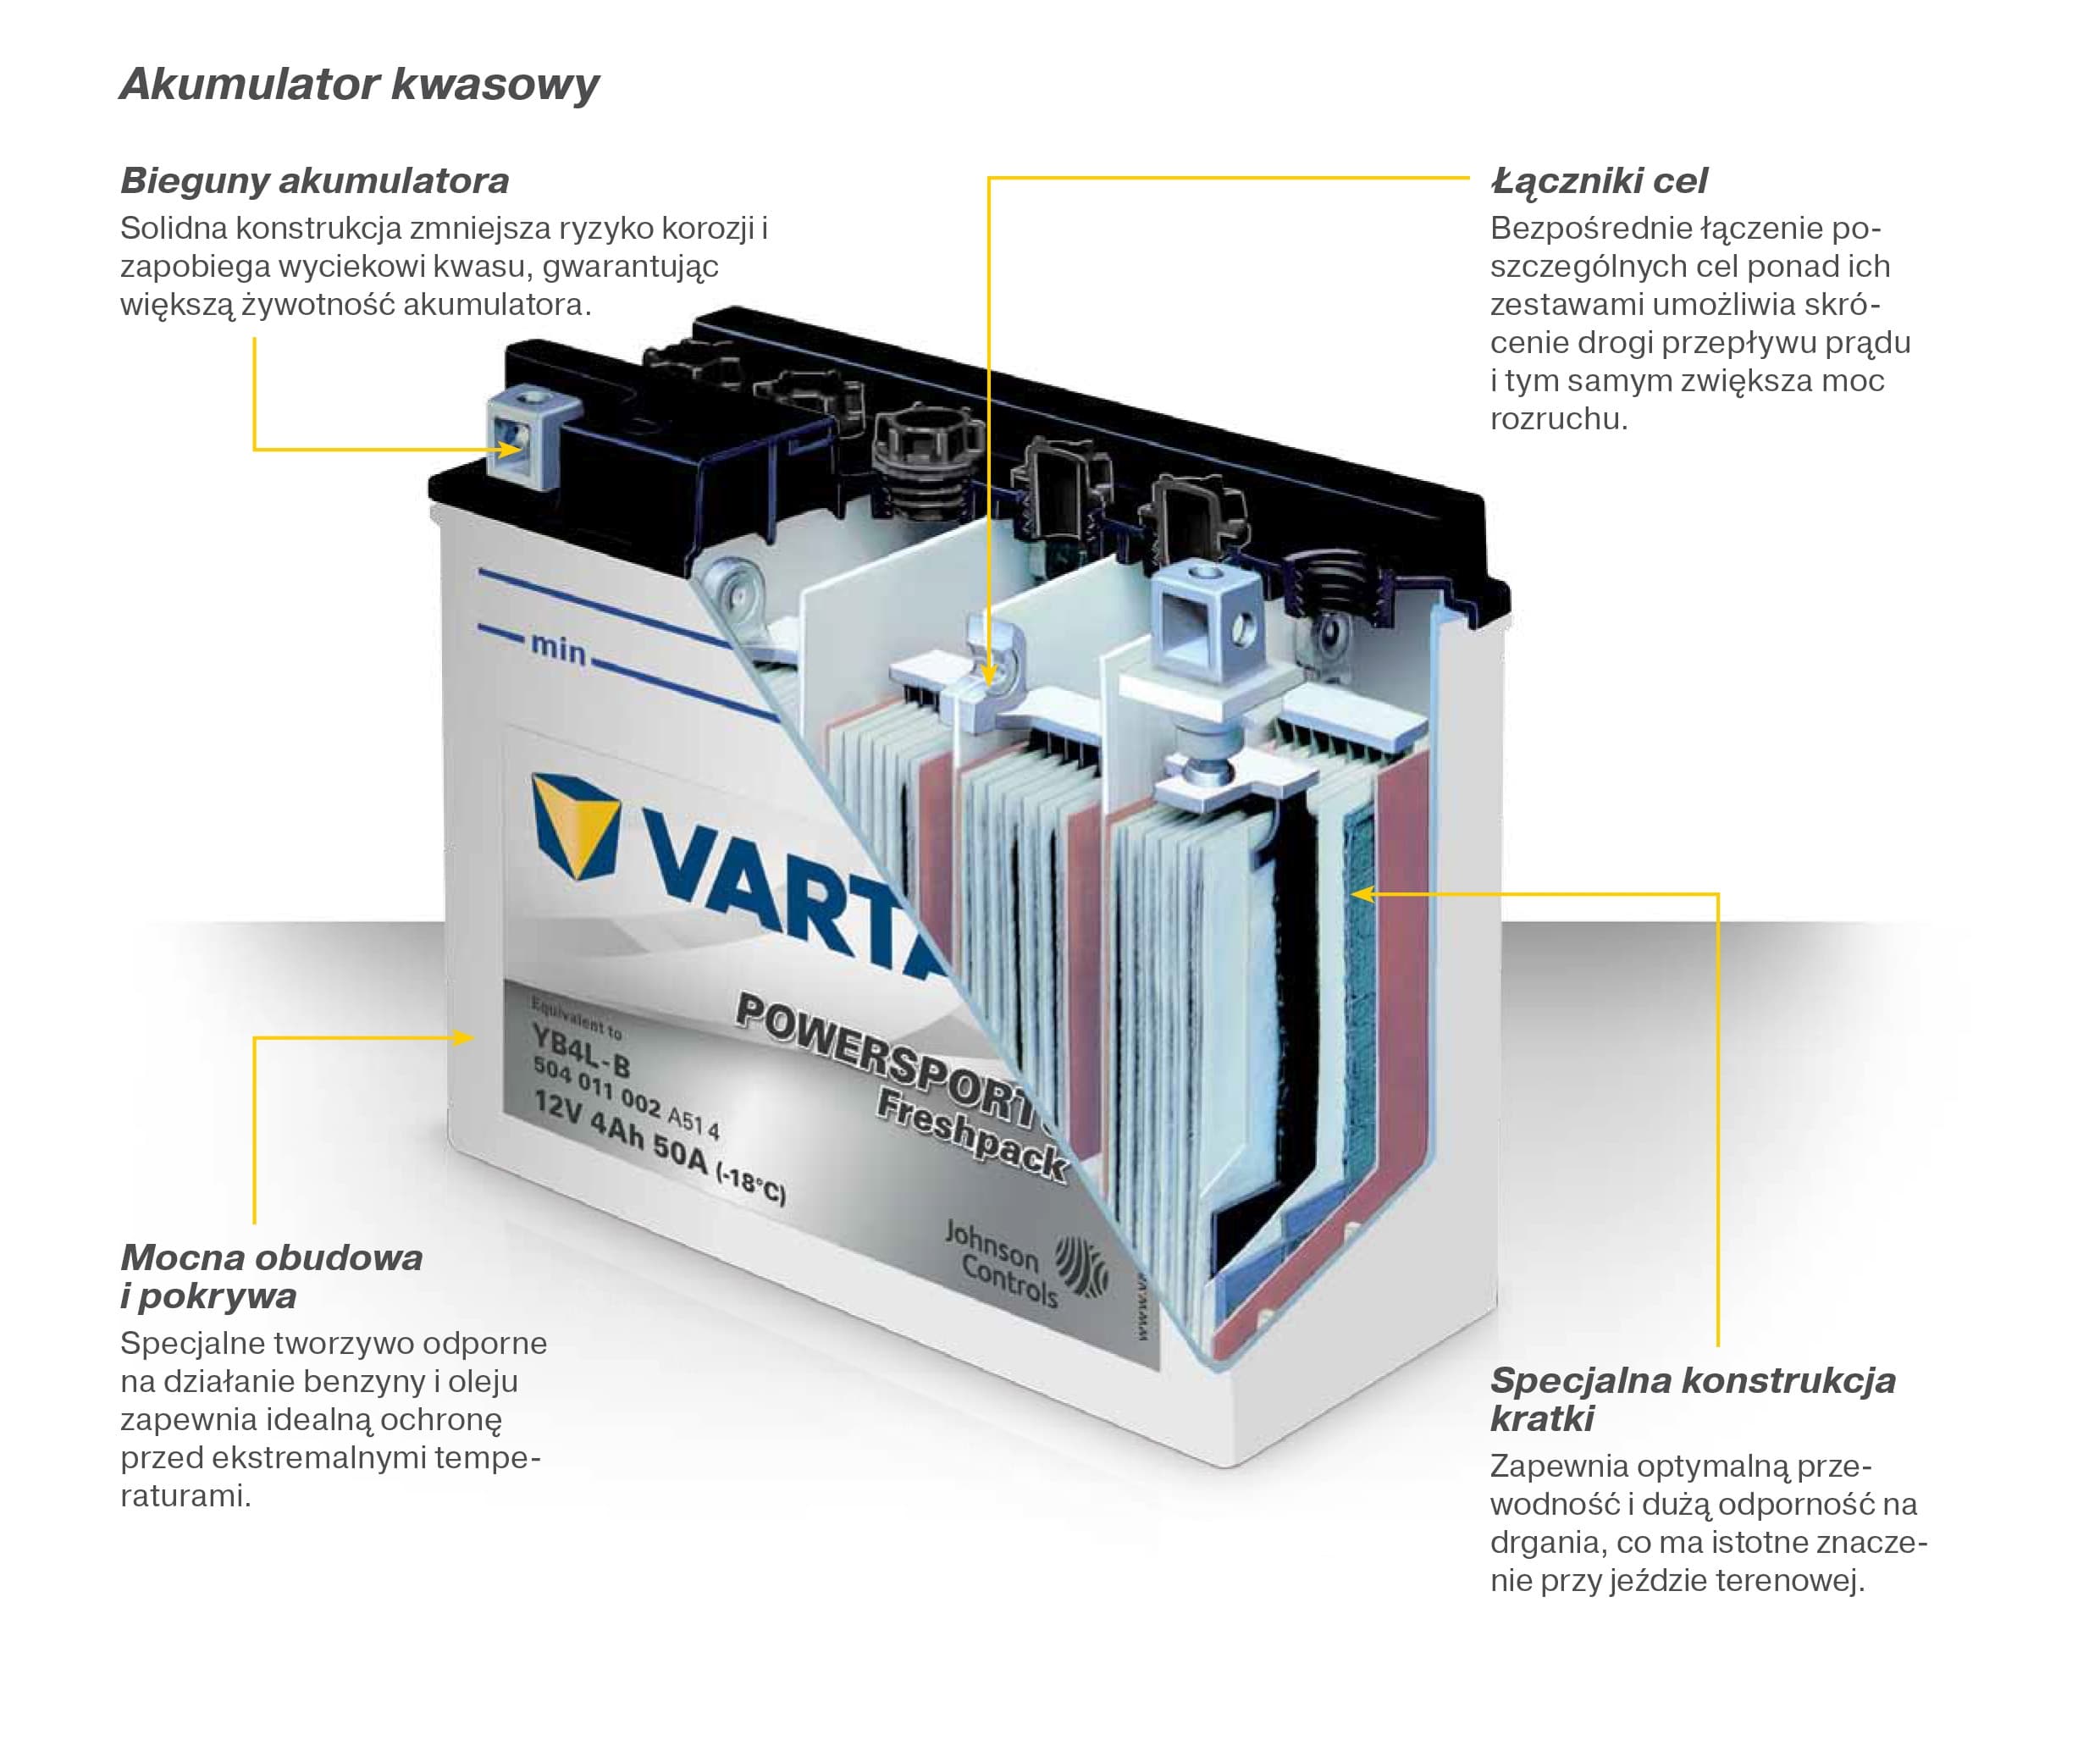 VARTA Powersports budowa akumulatora